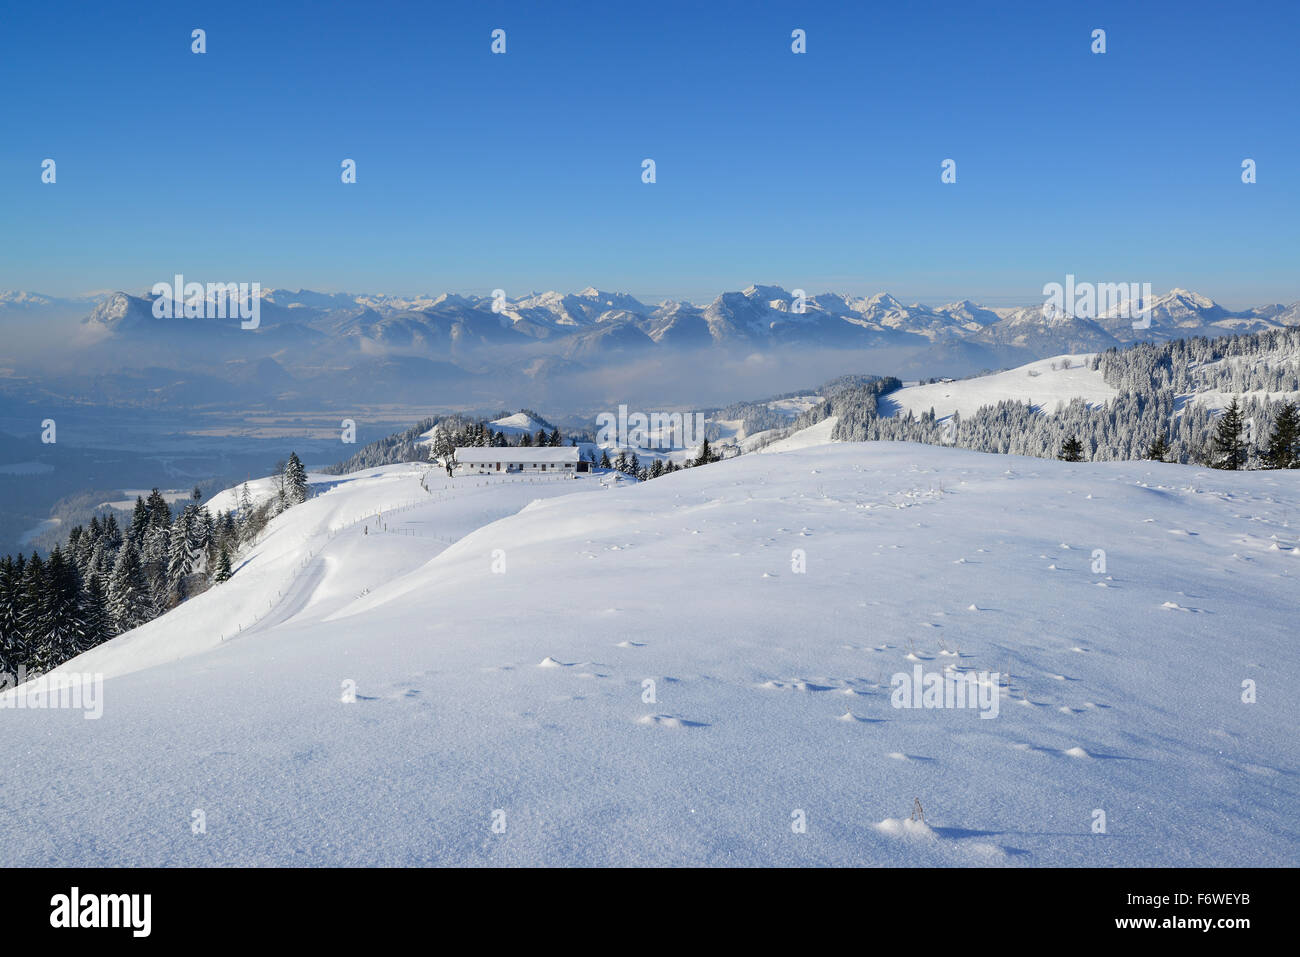 Snow-covered alps at Brennkopf, valley of Inn and Mangfall range in background, Brennkopf, Chiemgau range, Tyrol, Austria Stock Photo